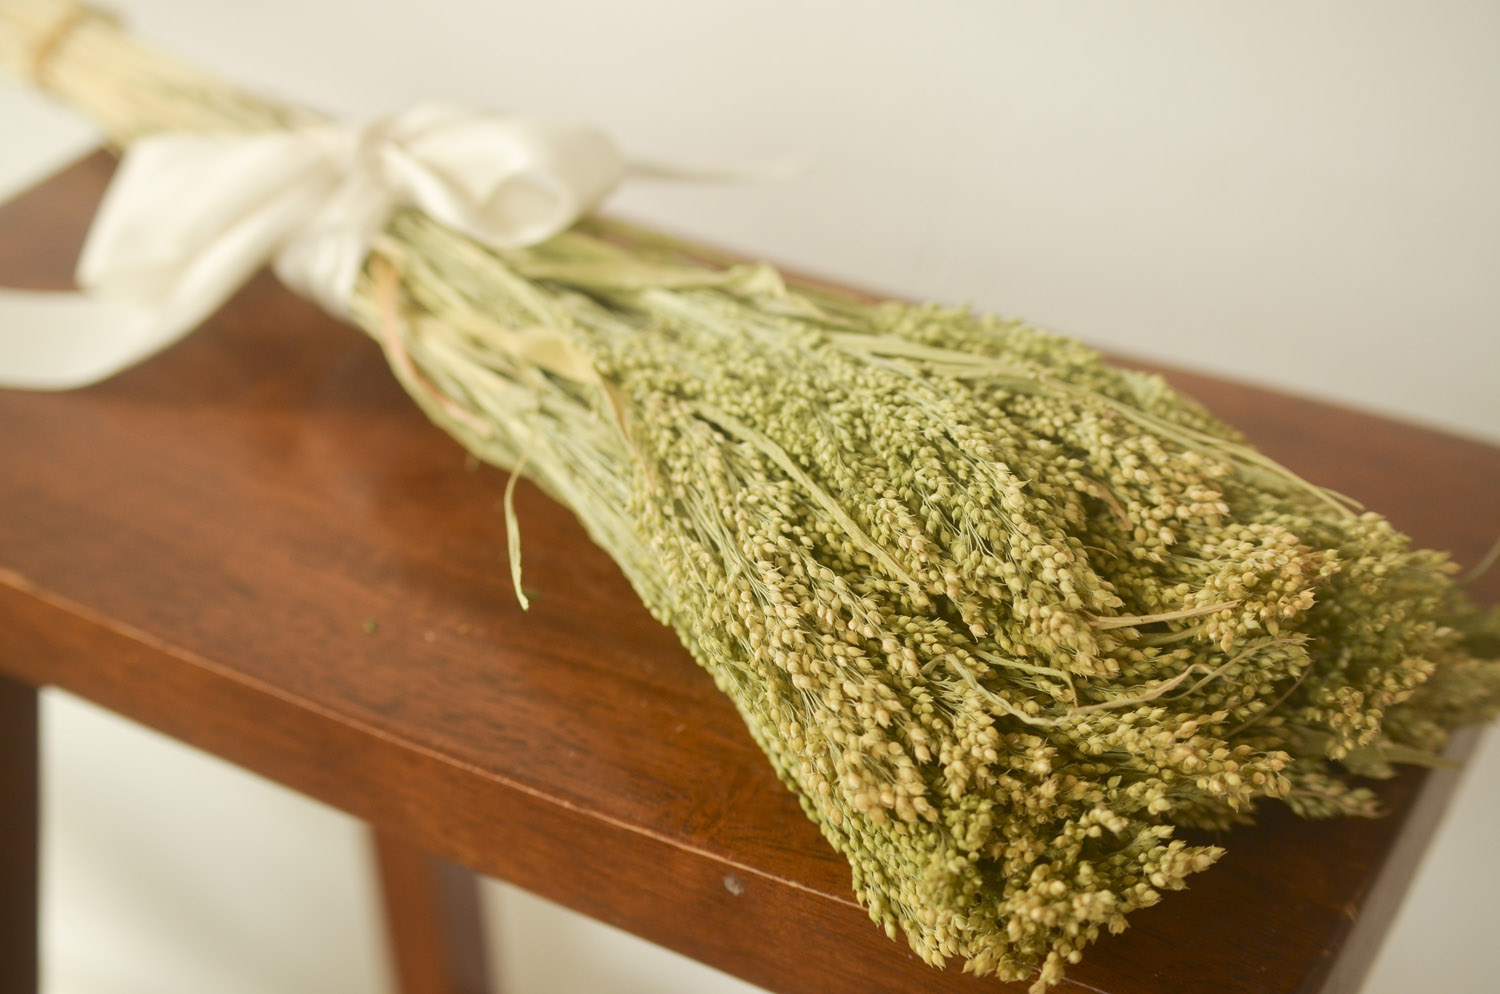 Dried Canary Grass | The Blaithin Blair Shop